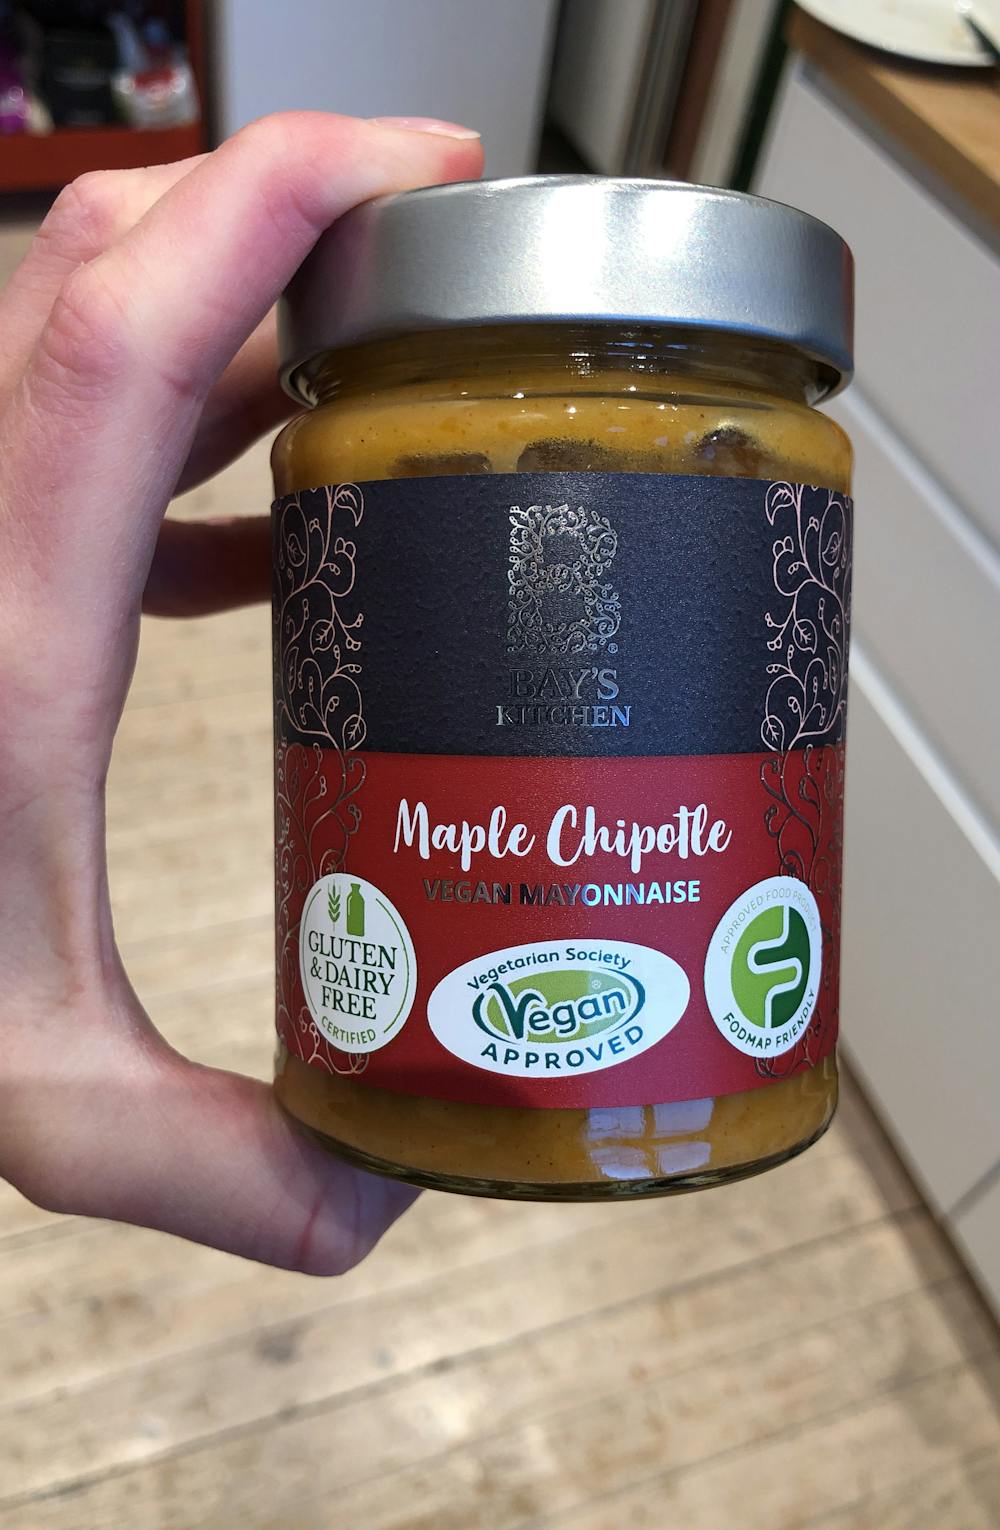 Maple Chipotle, vegan mayonnaise, Bay's Kitchen